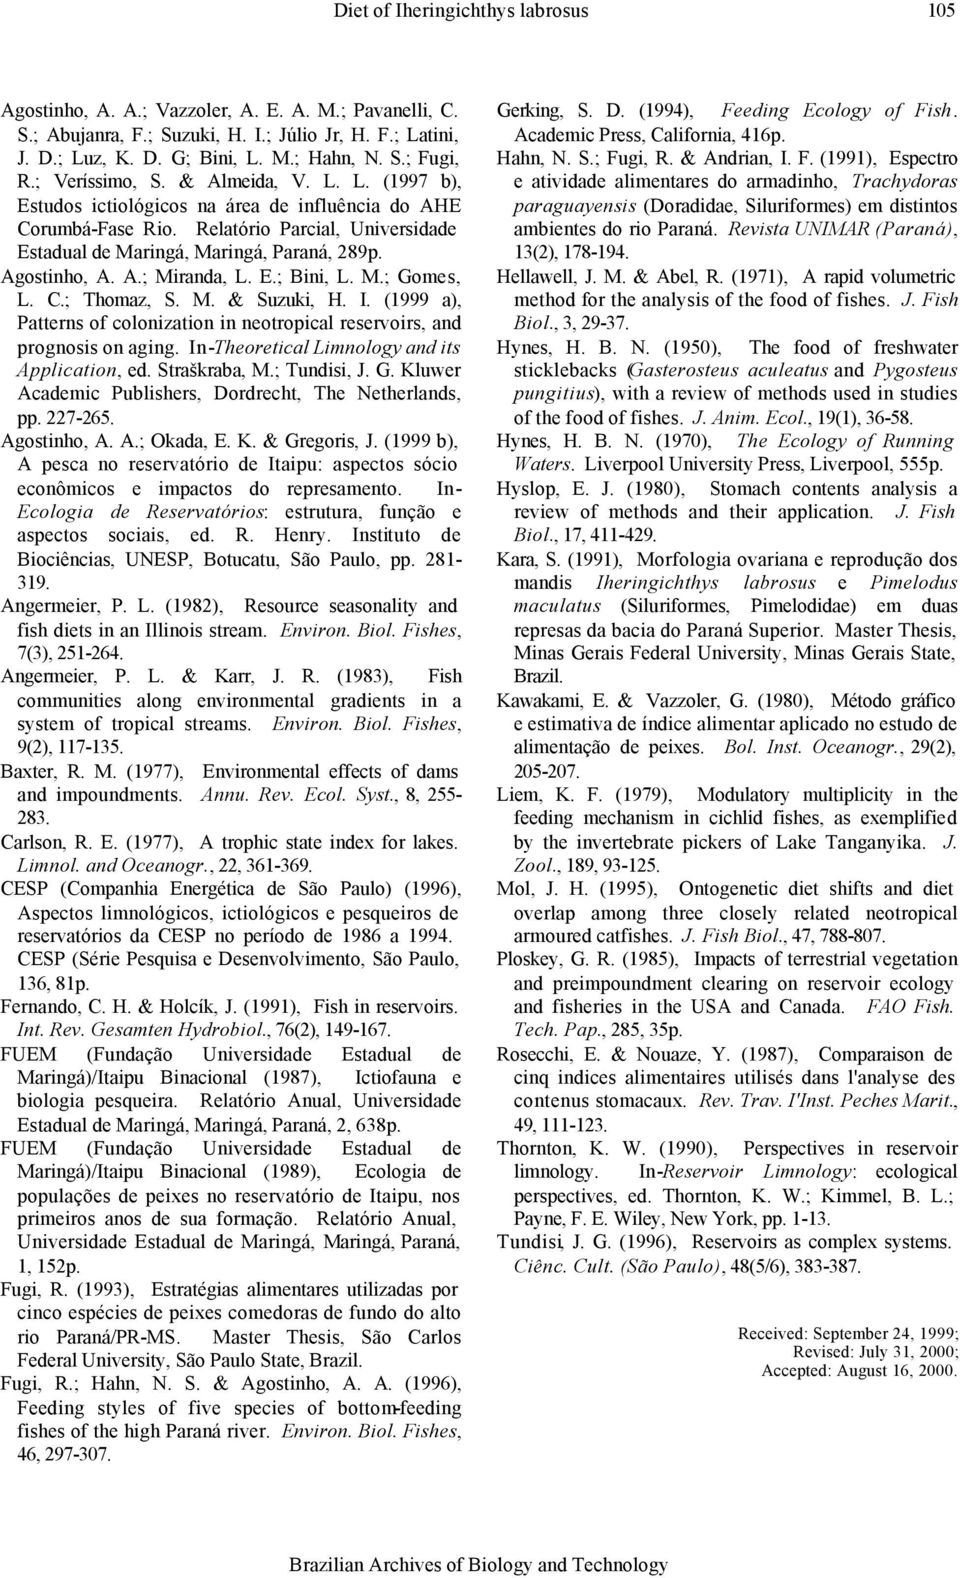 Agostinho, A. A.; Miranda, L. E.; Bini, L. M.; Gomes, L. C.; Thomaz, S. M. & Suzuki, H. I. (1999 a), Patterns of colonization in neotropical reservoirs, and prognosis on aging.